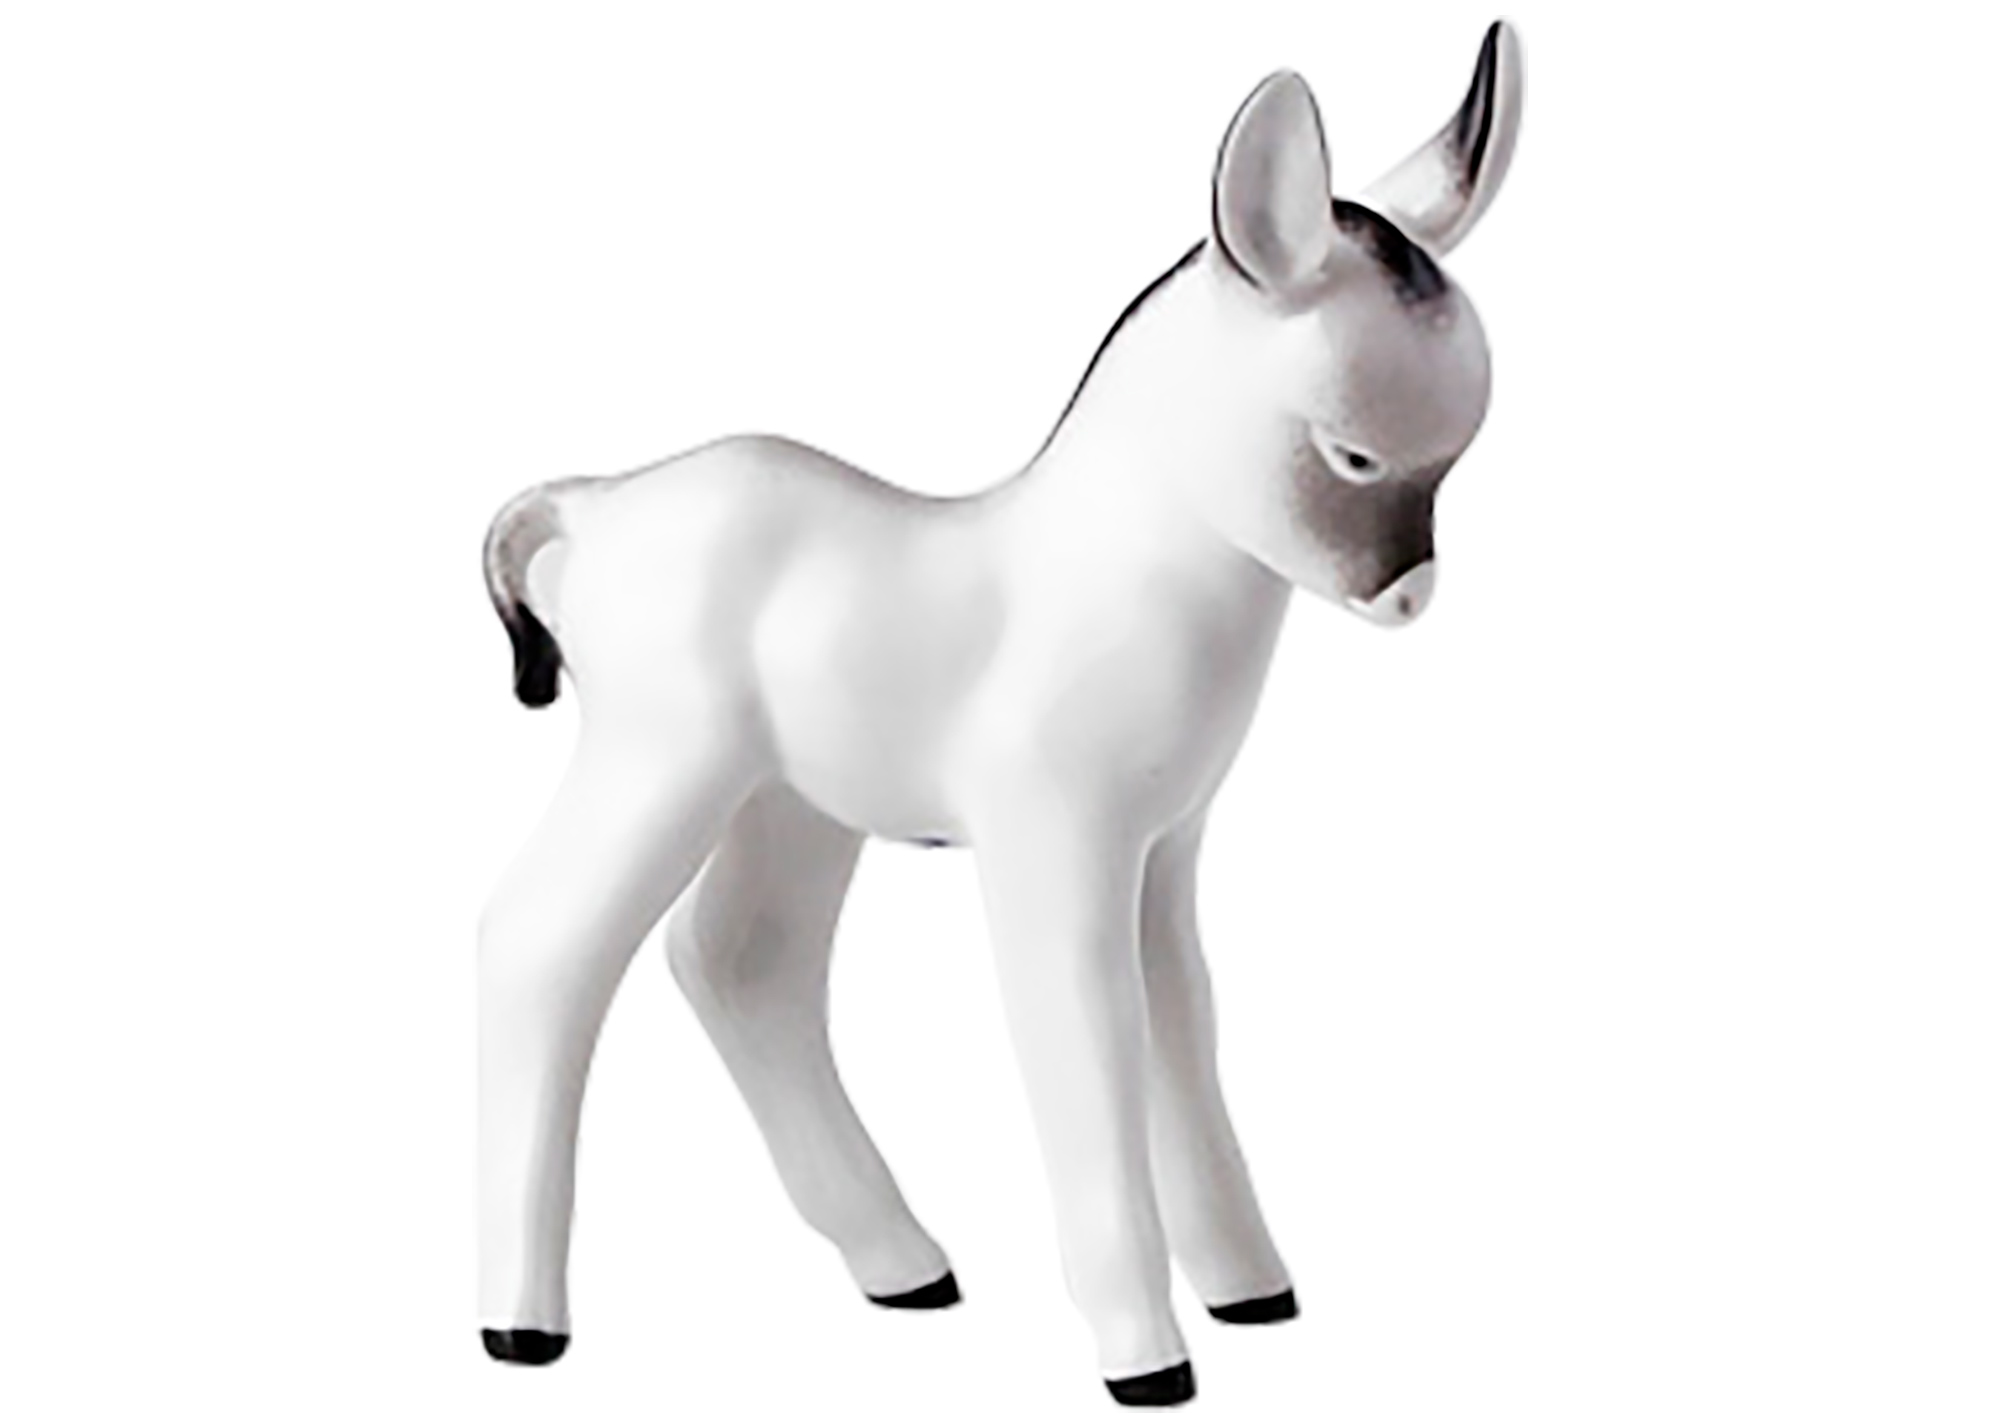 Buy Standing Donkey Figurine at GoldenCockerel.com